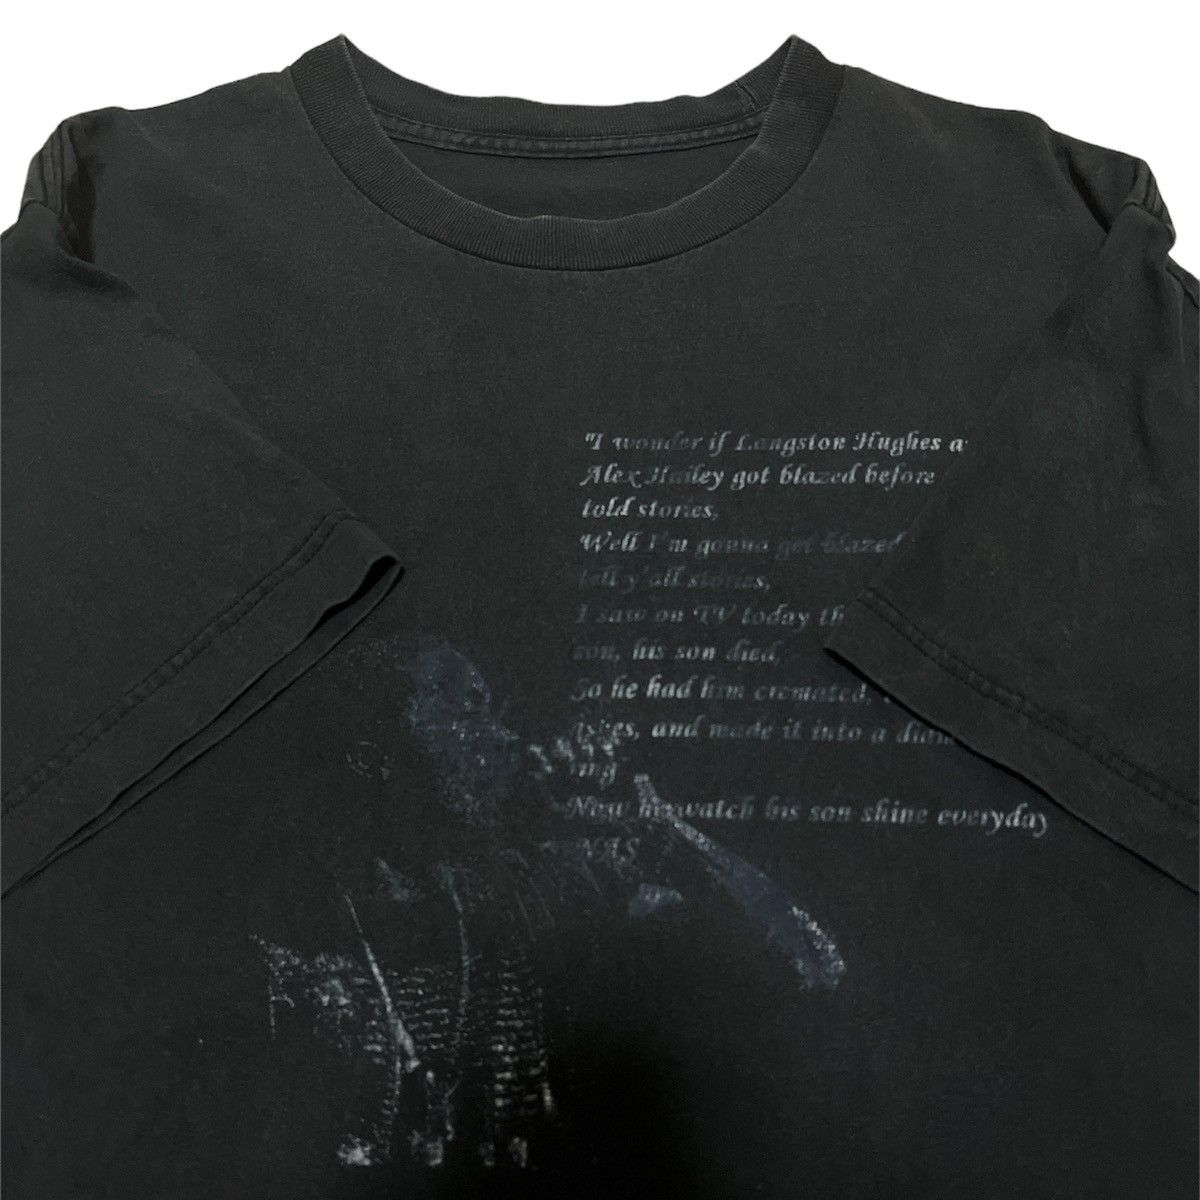 Vintage - Nas Blunt Ashes song lyric T shirt 2006 - 5